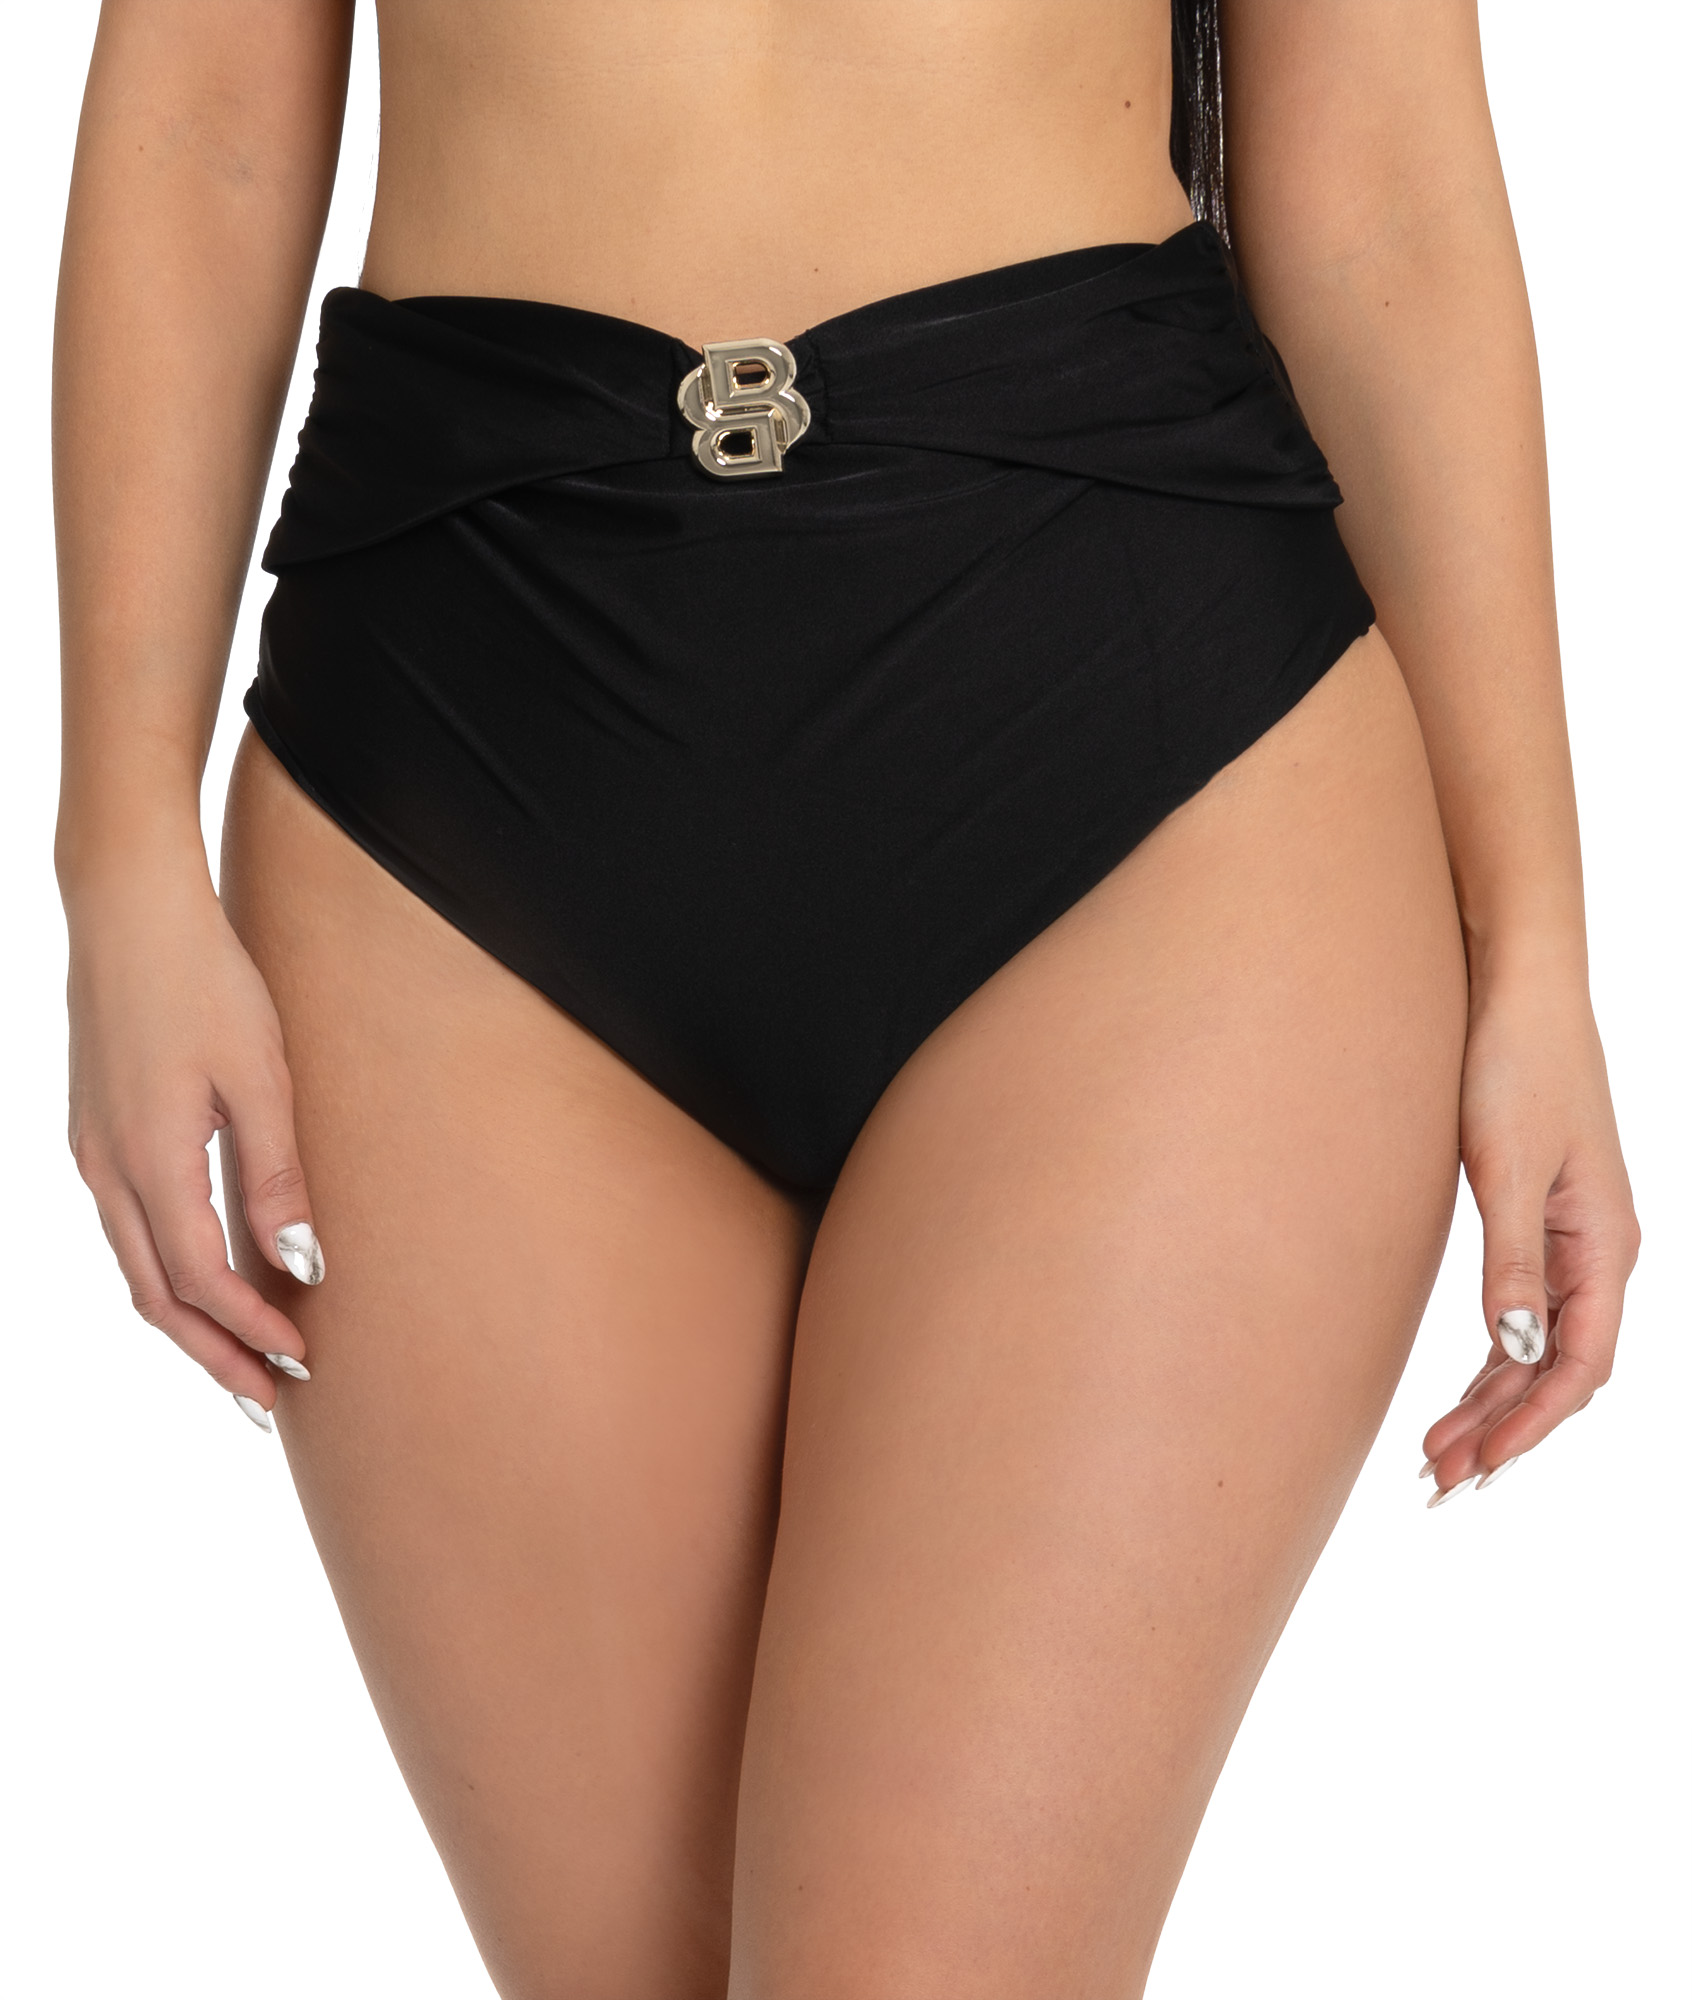 Hugo Boss Dámské plavkové kalhotky BOSS Bikini 50515505-001 XL